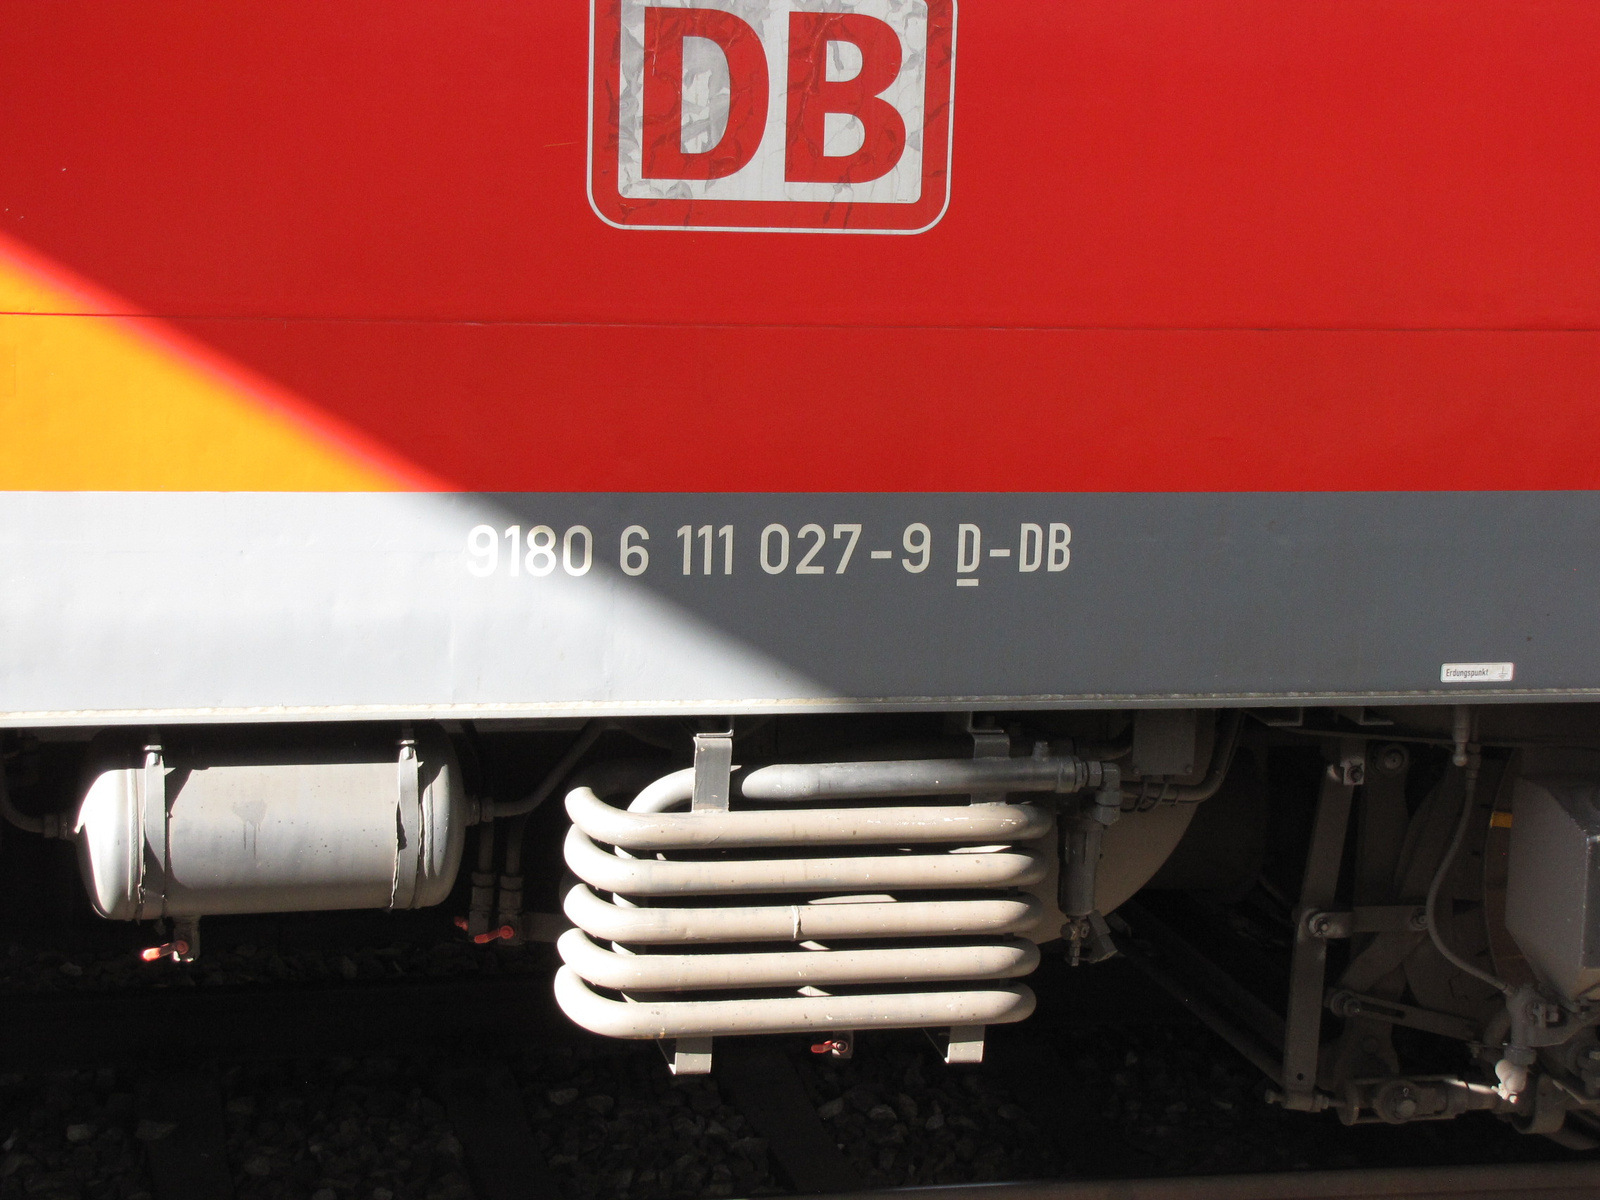 München, Hbf., D-DB 9180 6 111 027-9, SzG3